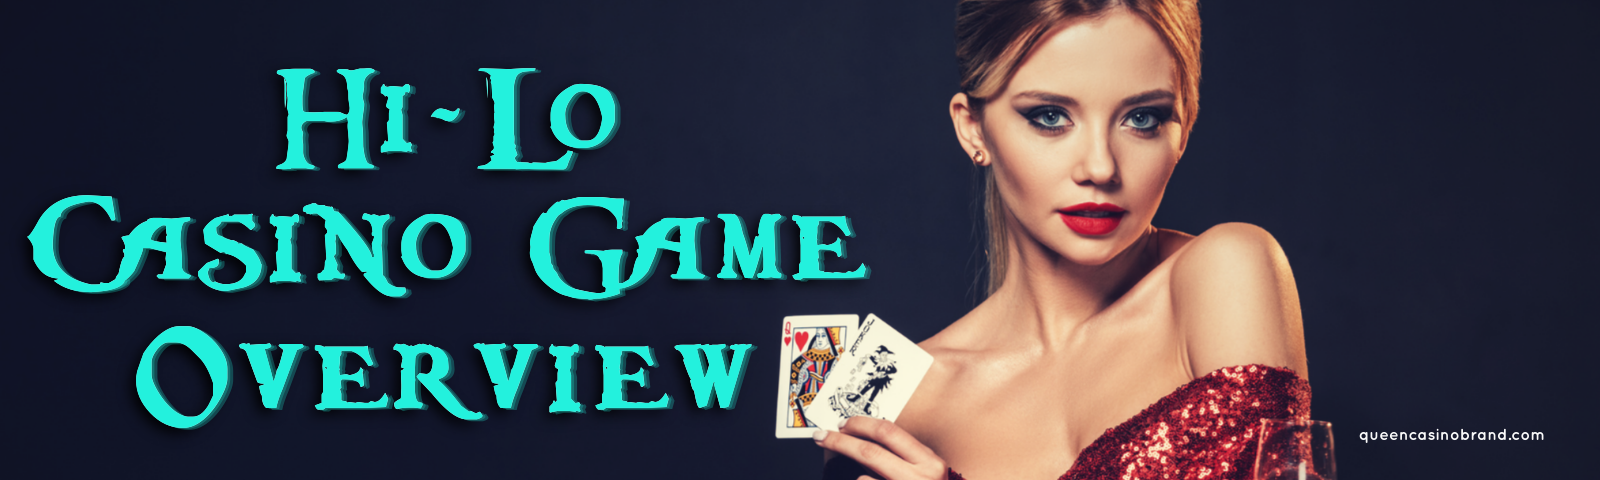 Hi-Lo Casino Game Overview | Queen Casino Brand